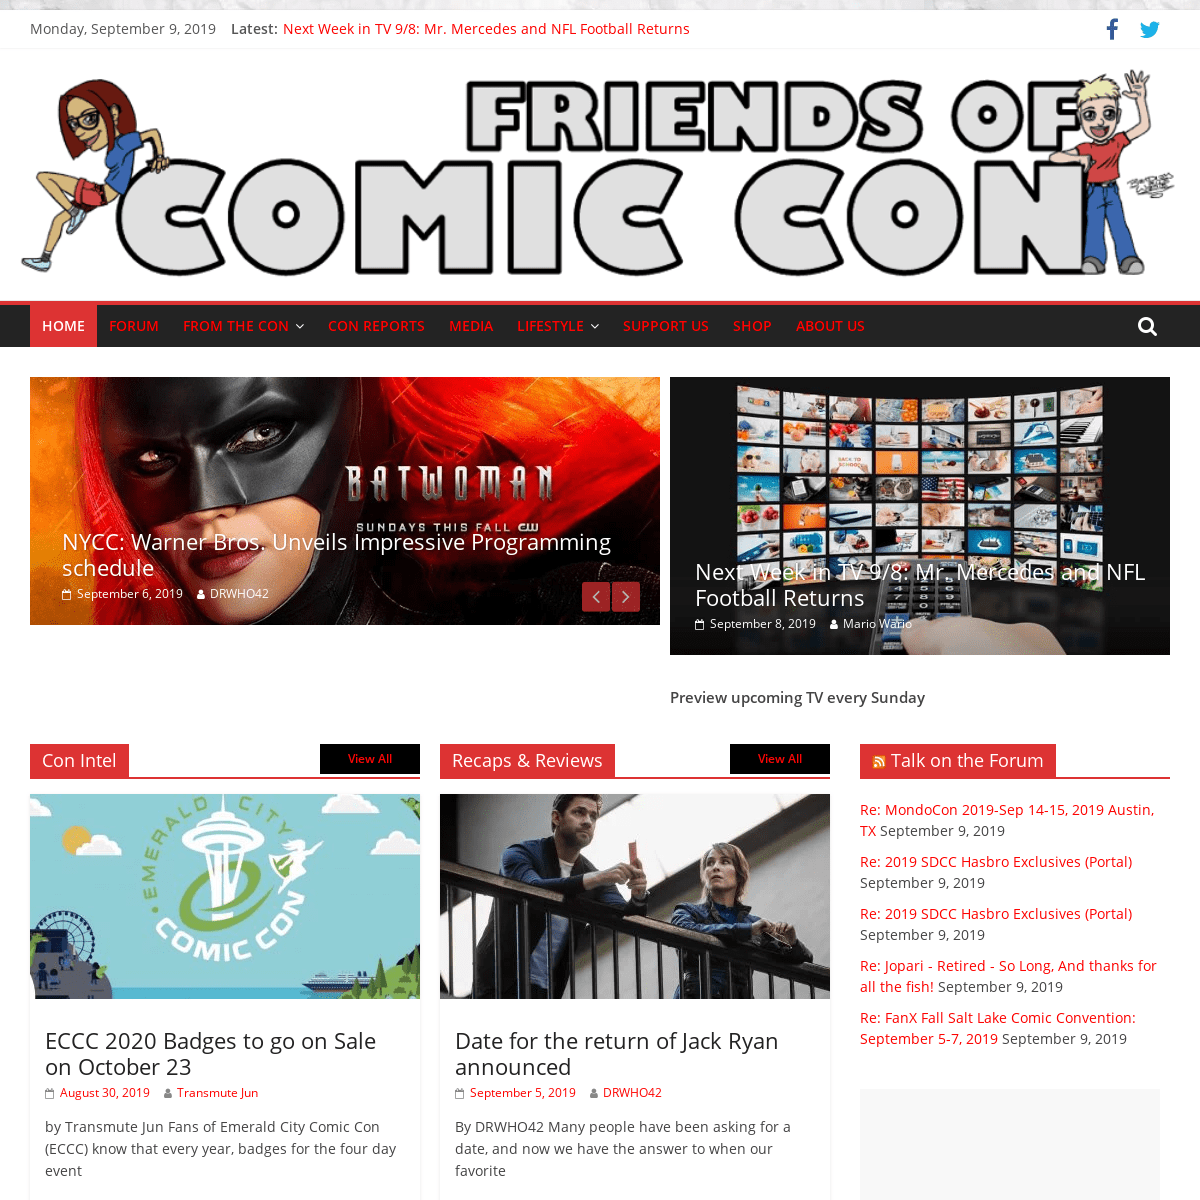 A complete backup of friendsofcc.com